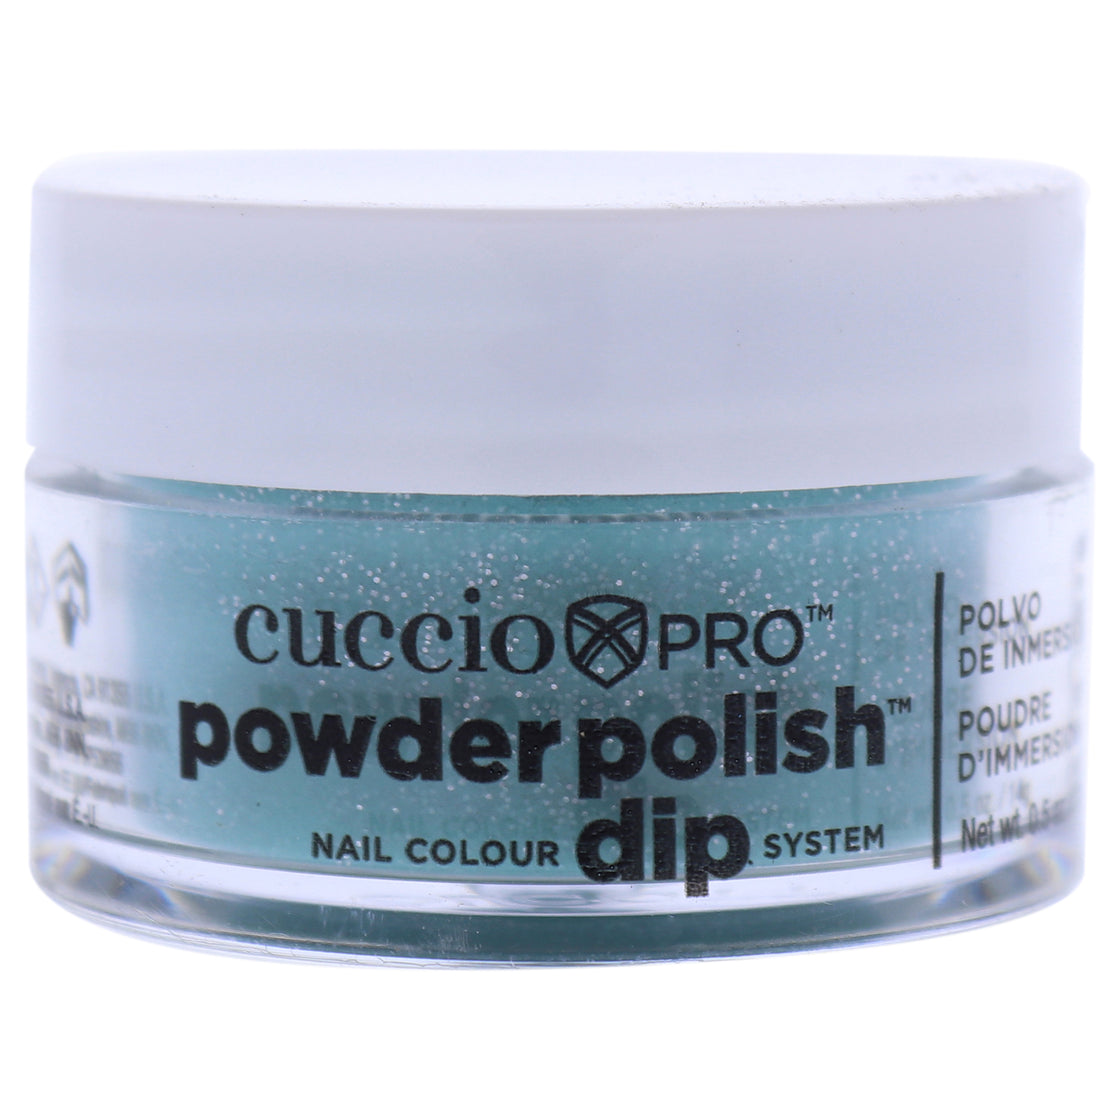 Pro Powder Polish Nail Colour Dip System - Jade with Silver Glitter by Cuccio Colour for Women - 0.5 oz Nail Powder